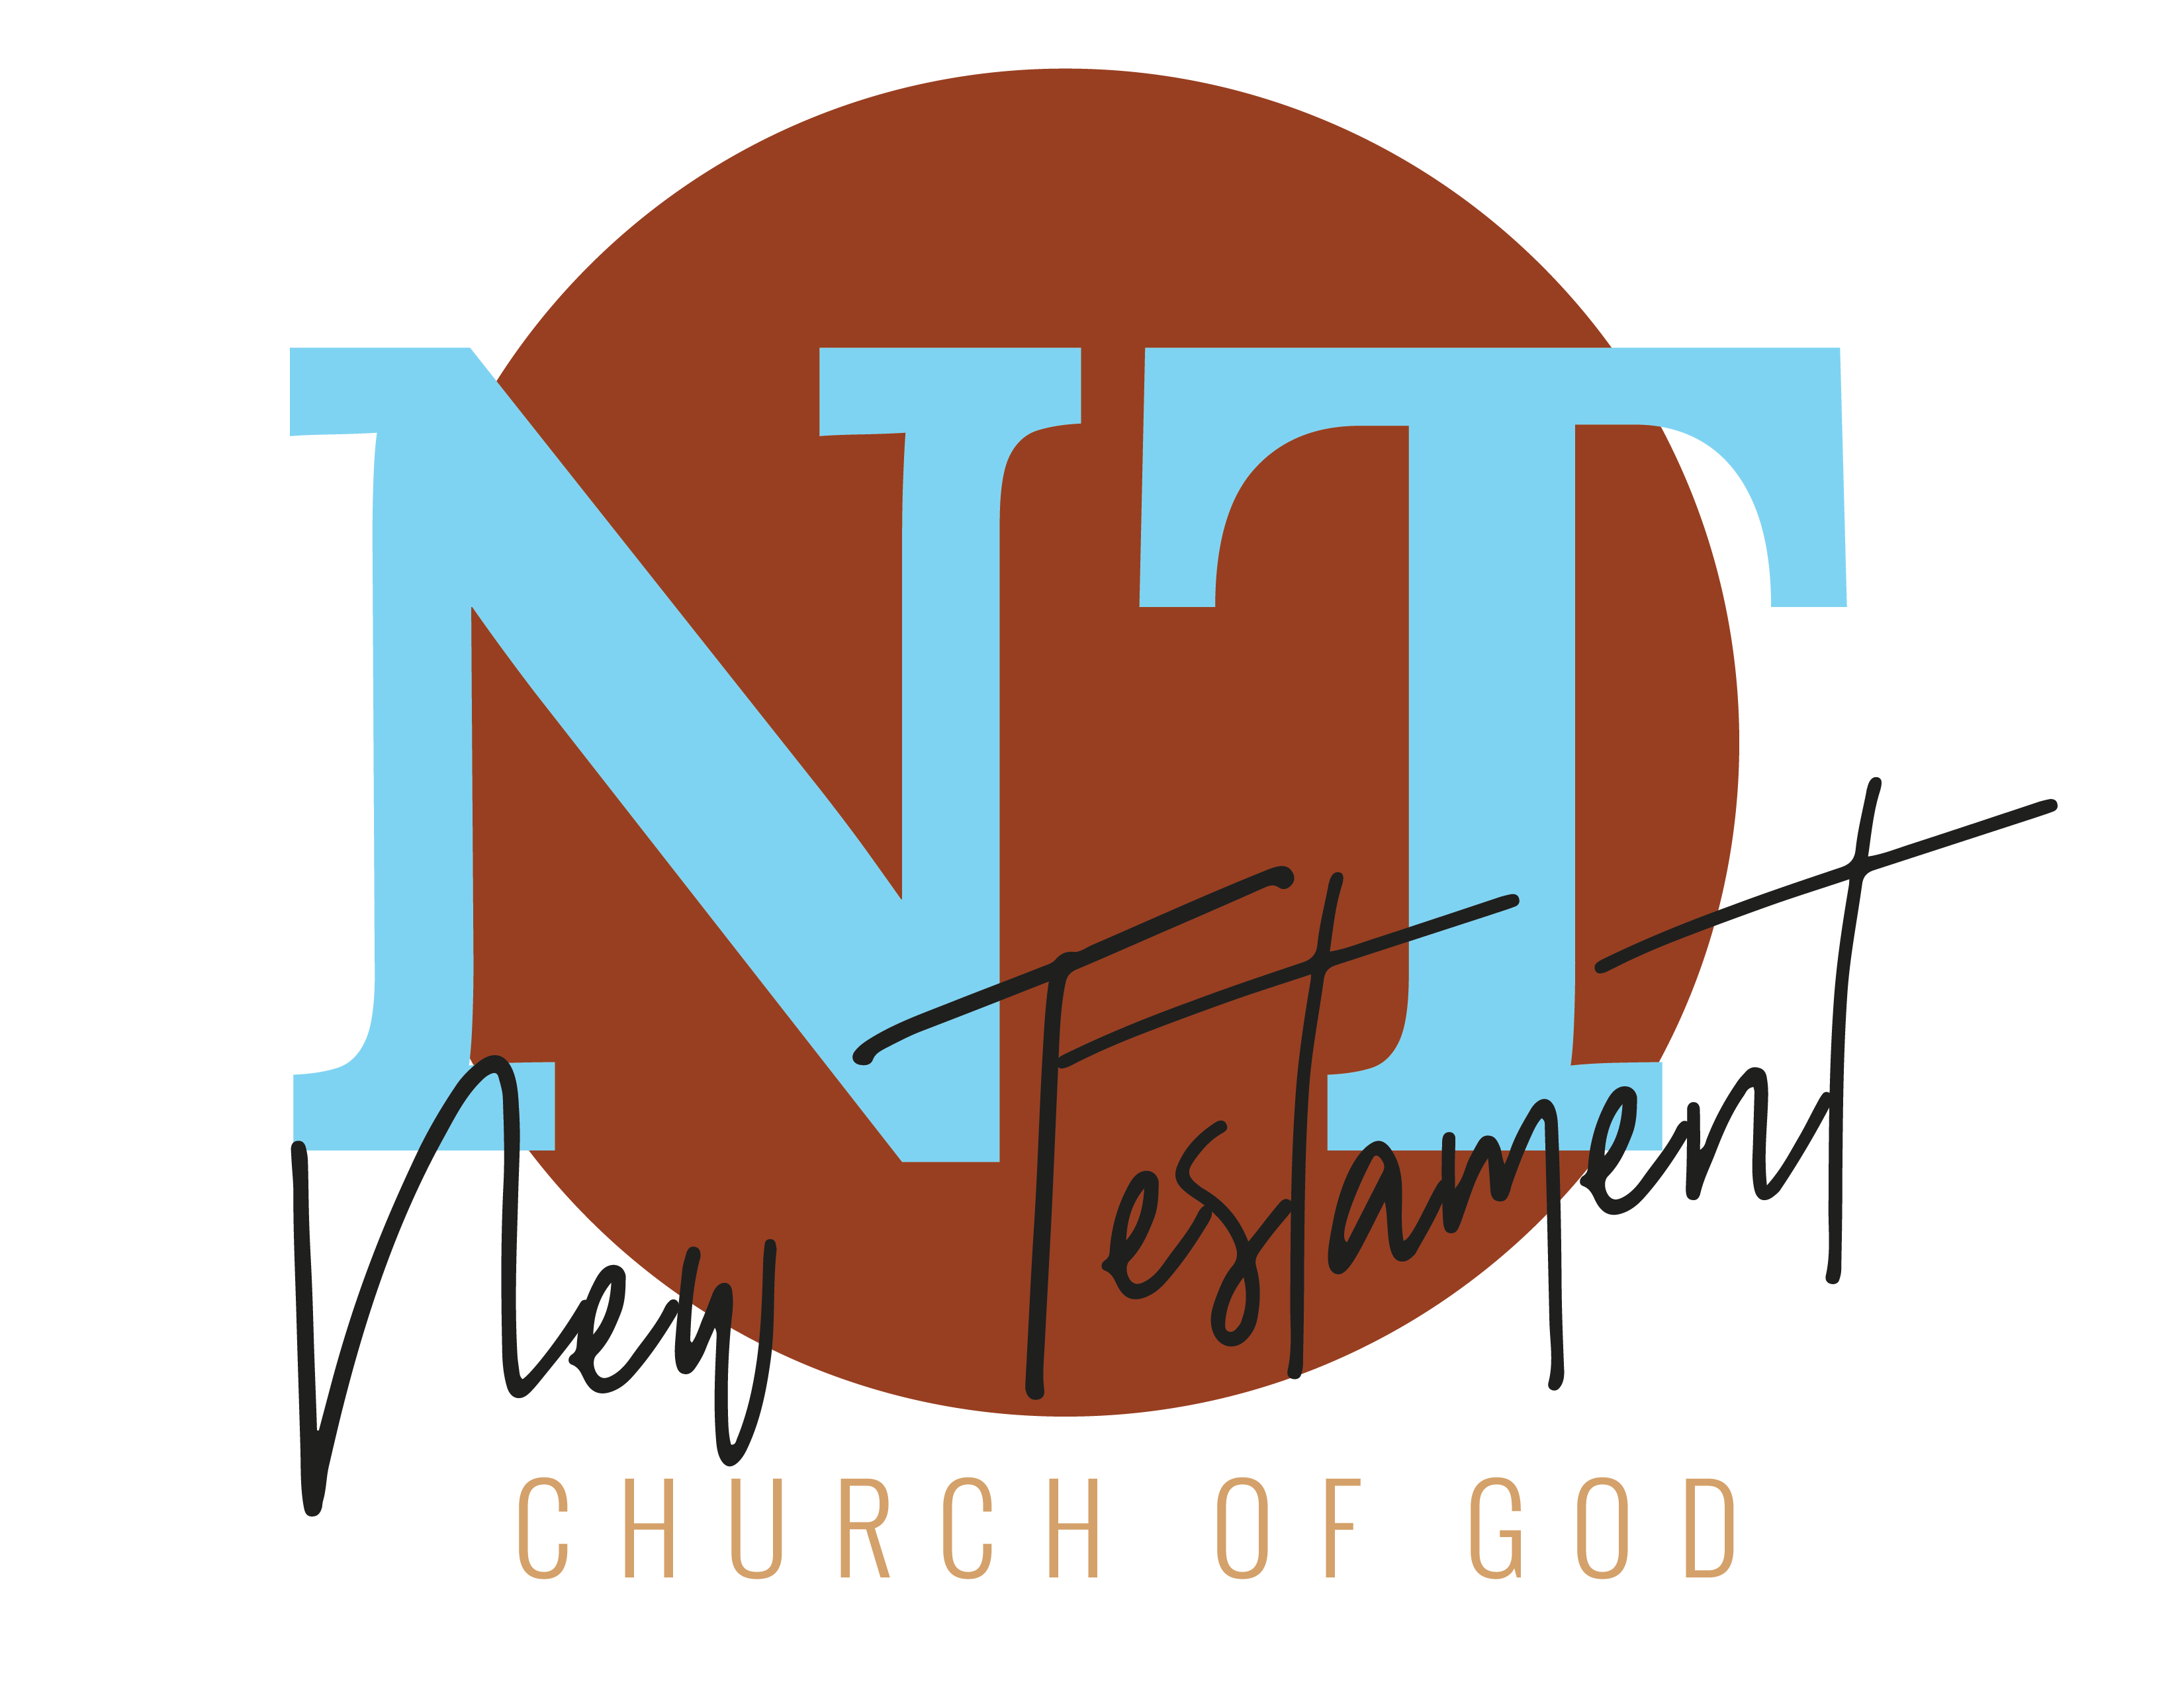 New Testament Church of God